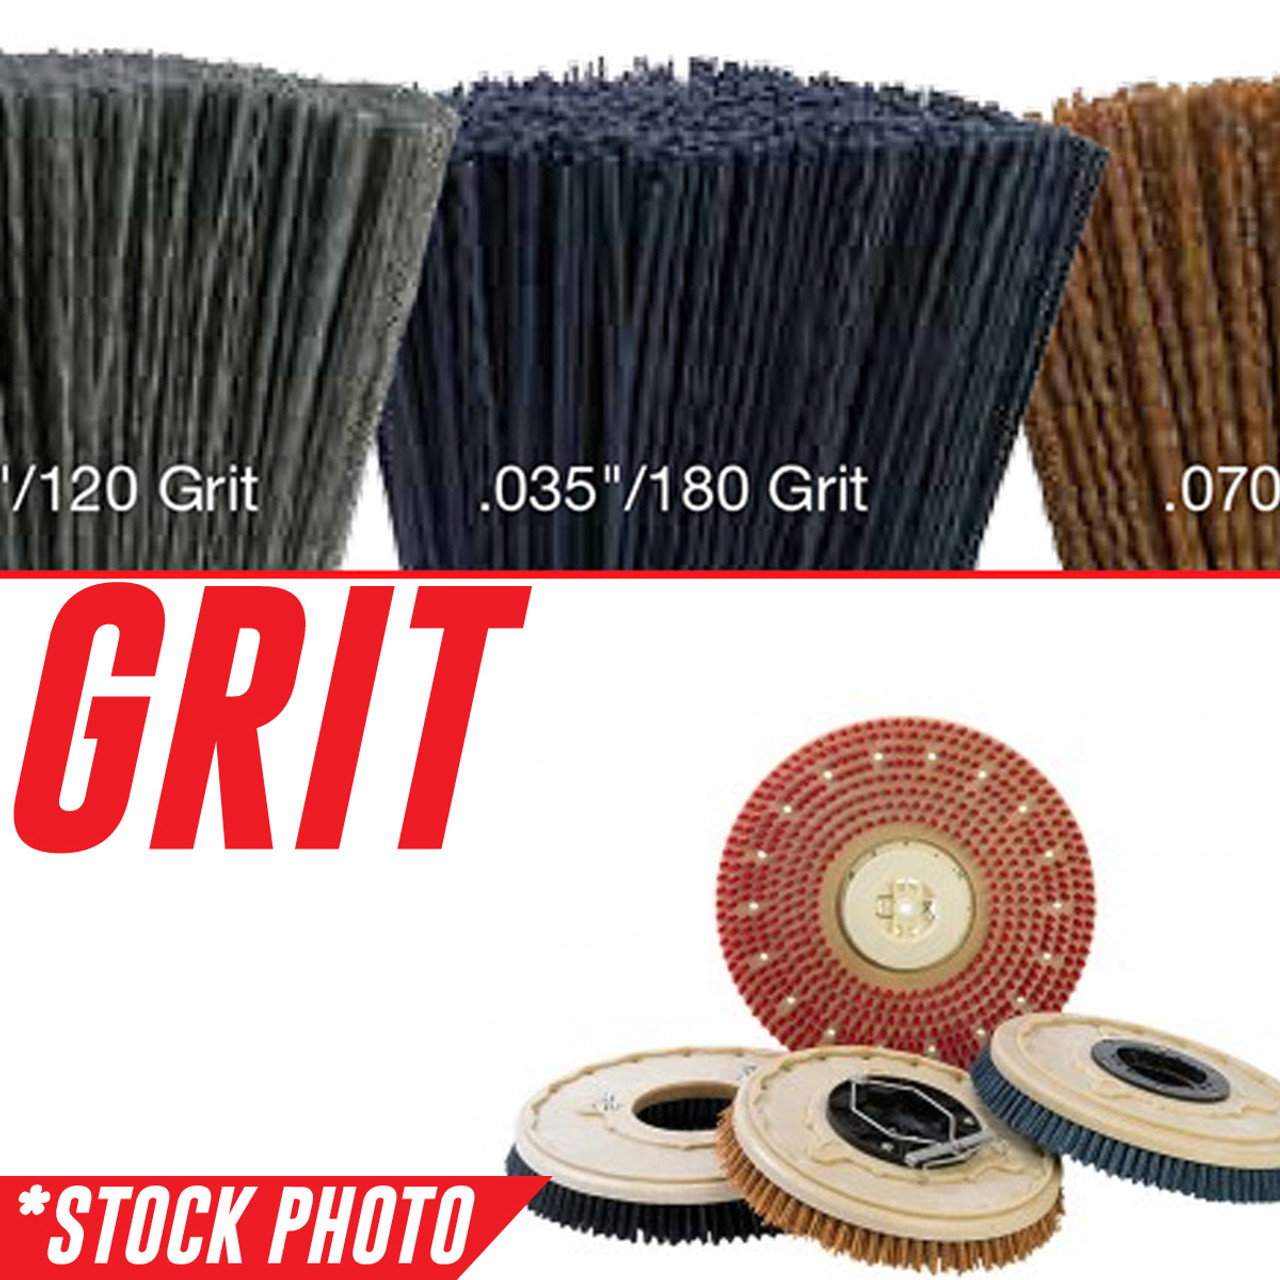 15" Rotary Brush .035"/180 Grit fits International Cleaning Equipment Models i32, i36, RS32